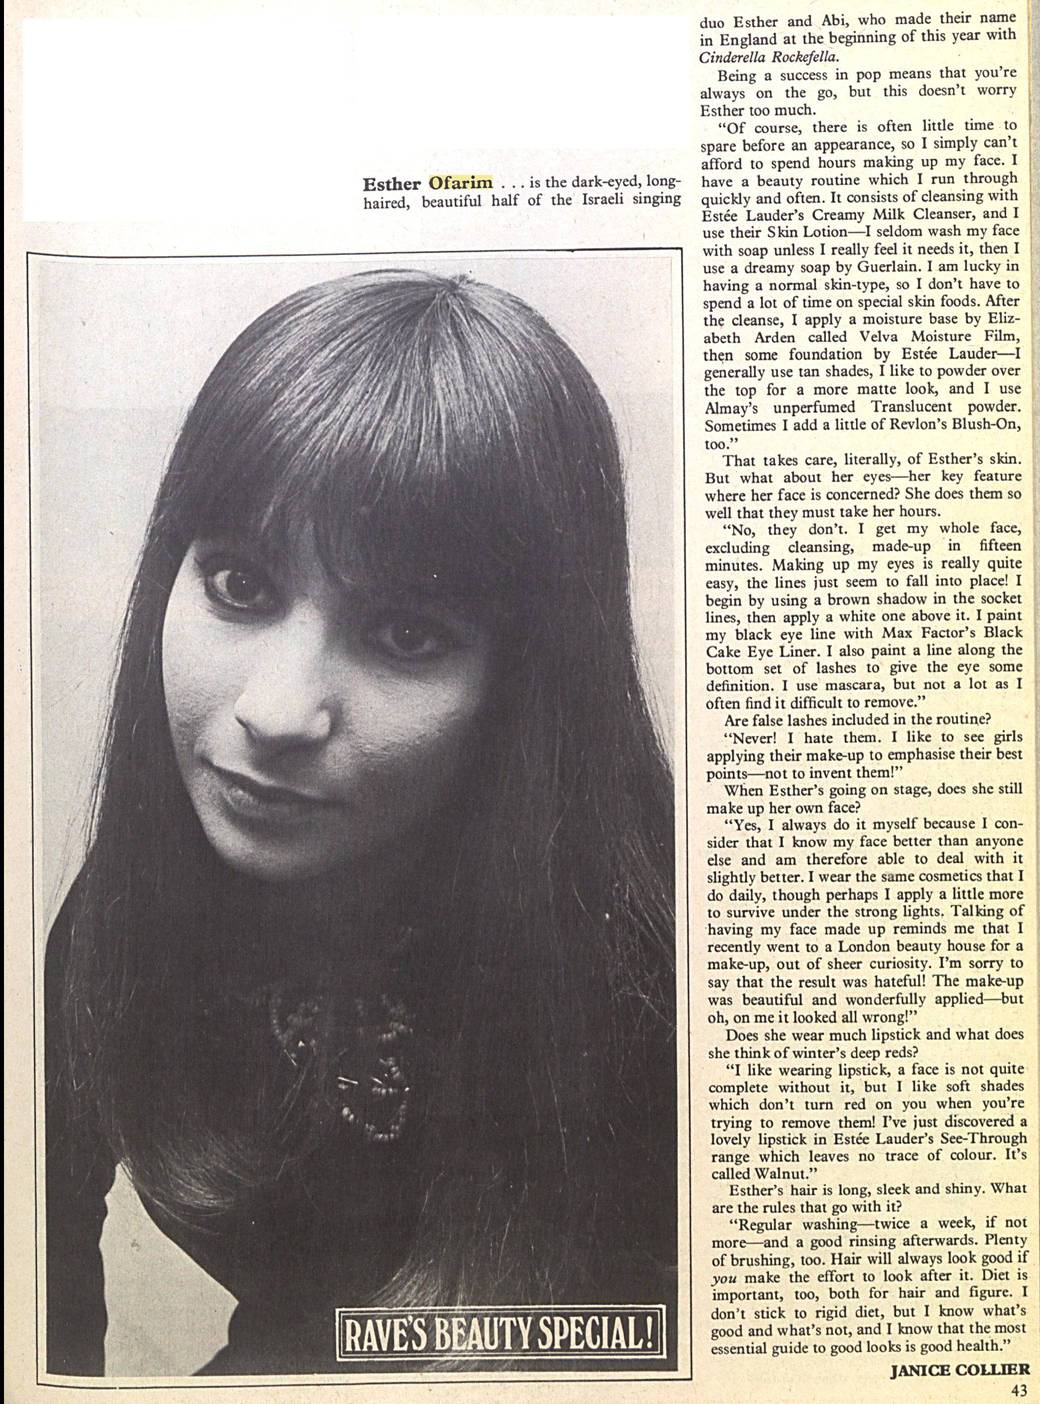 Esther Ofarim's make-up tipps, taken from Pick of the Pops, November 1, 1968